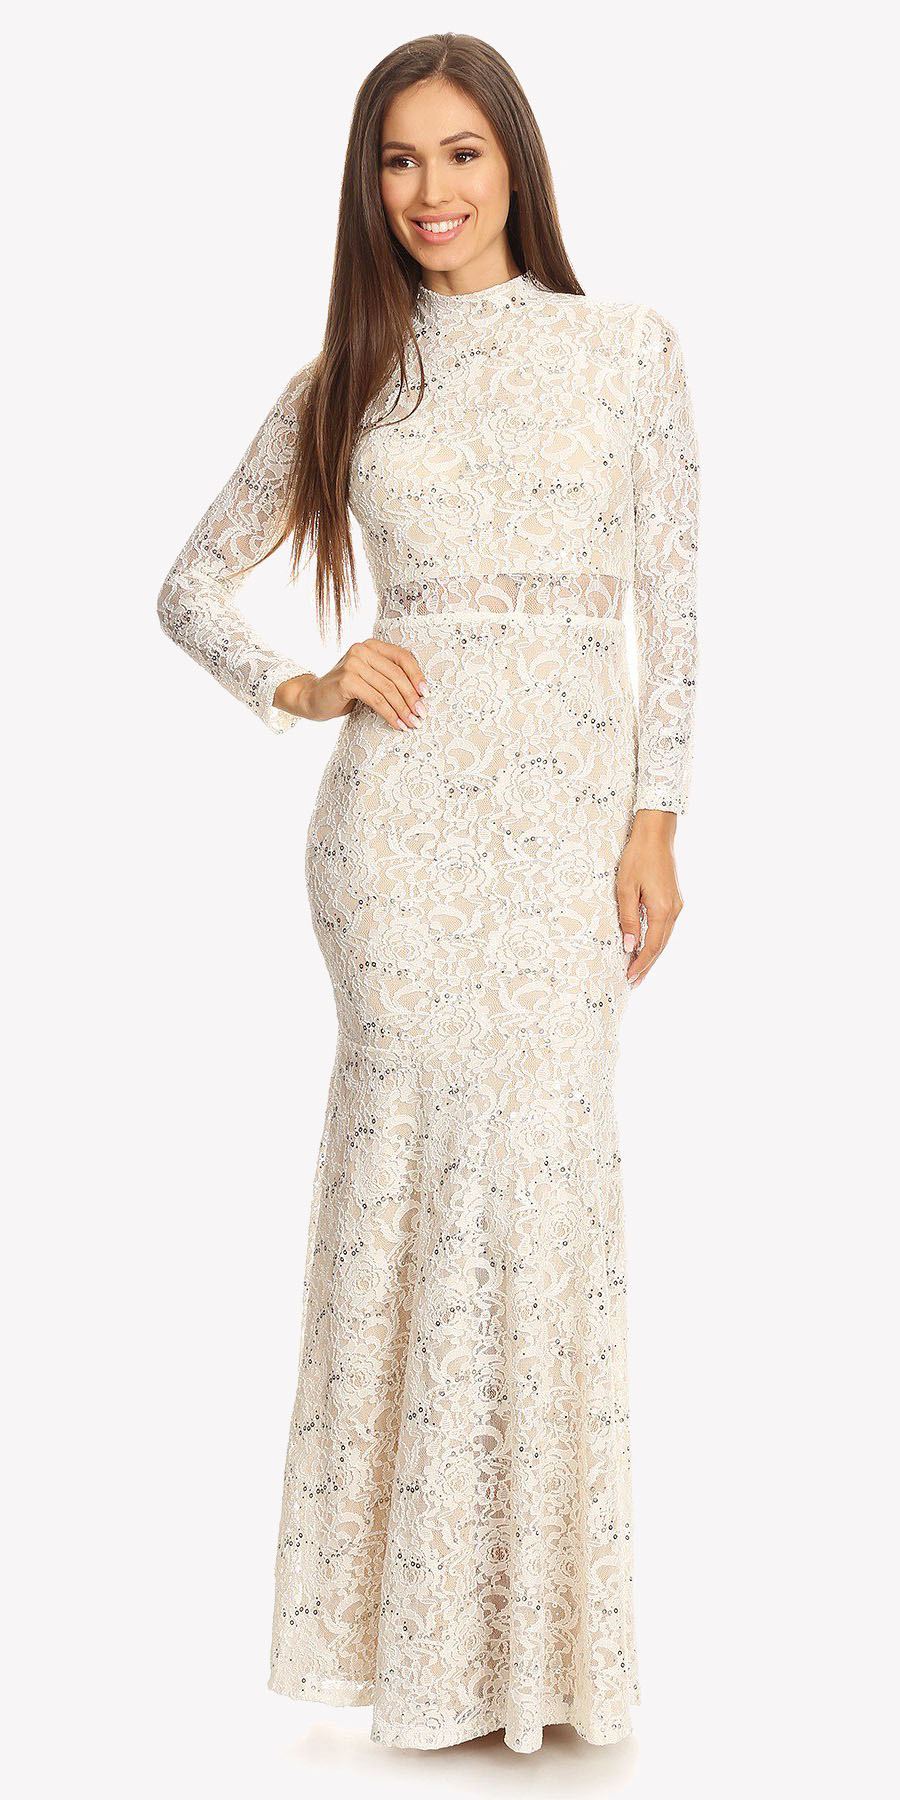 Long Sleeve Lace Full Length Dress Ivory/Gold Mock 2 Piece High Neck